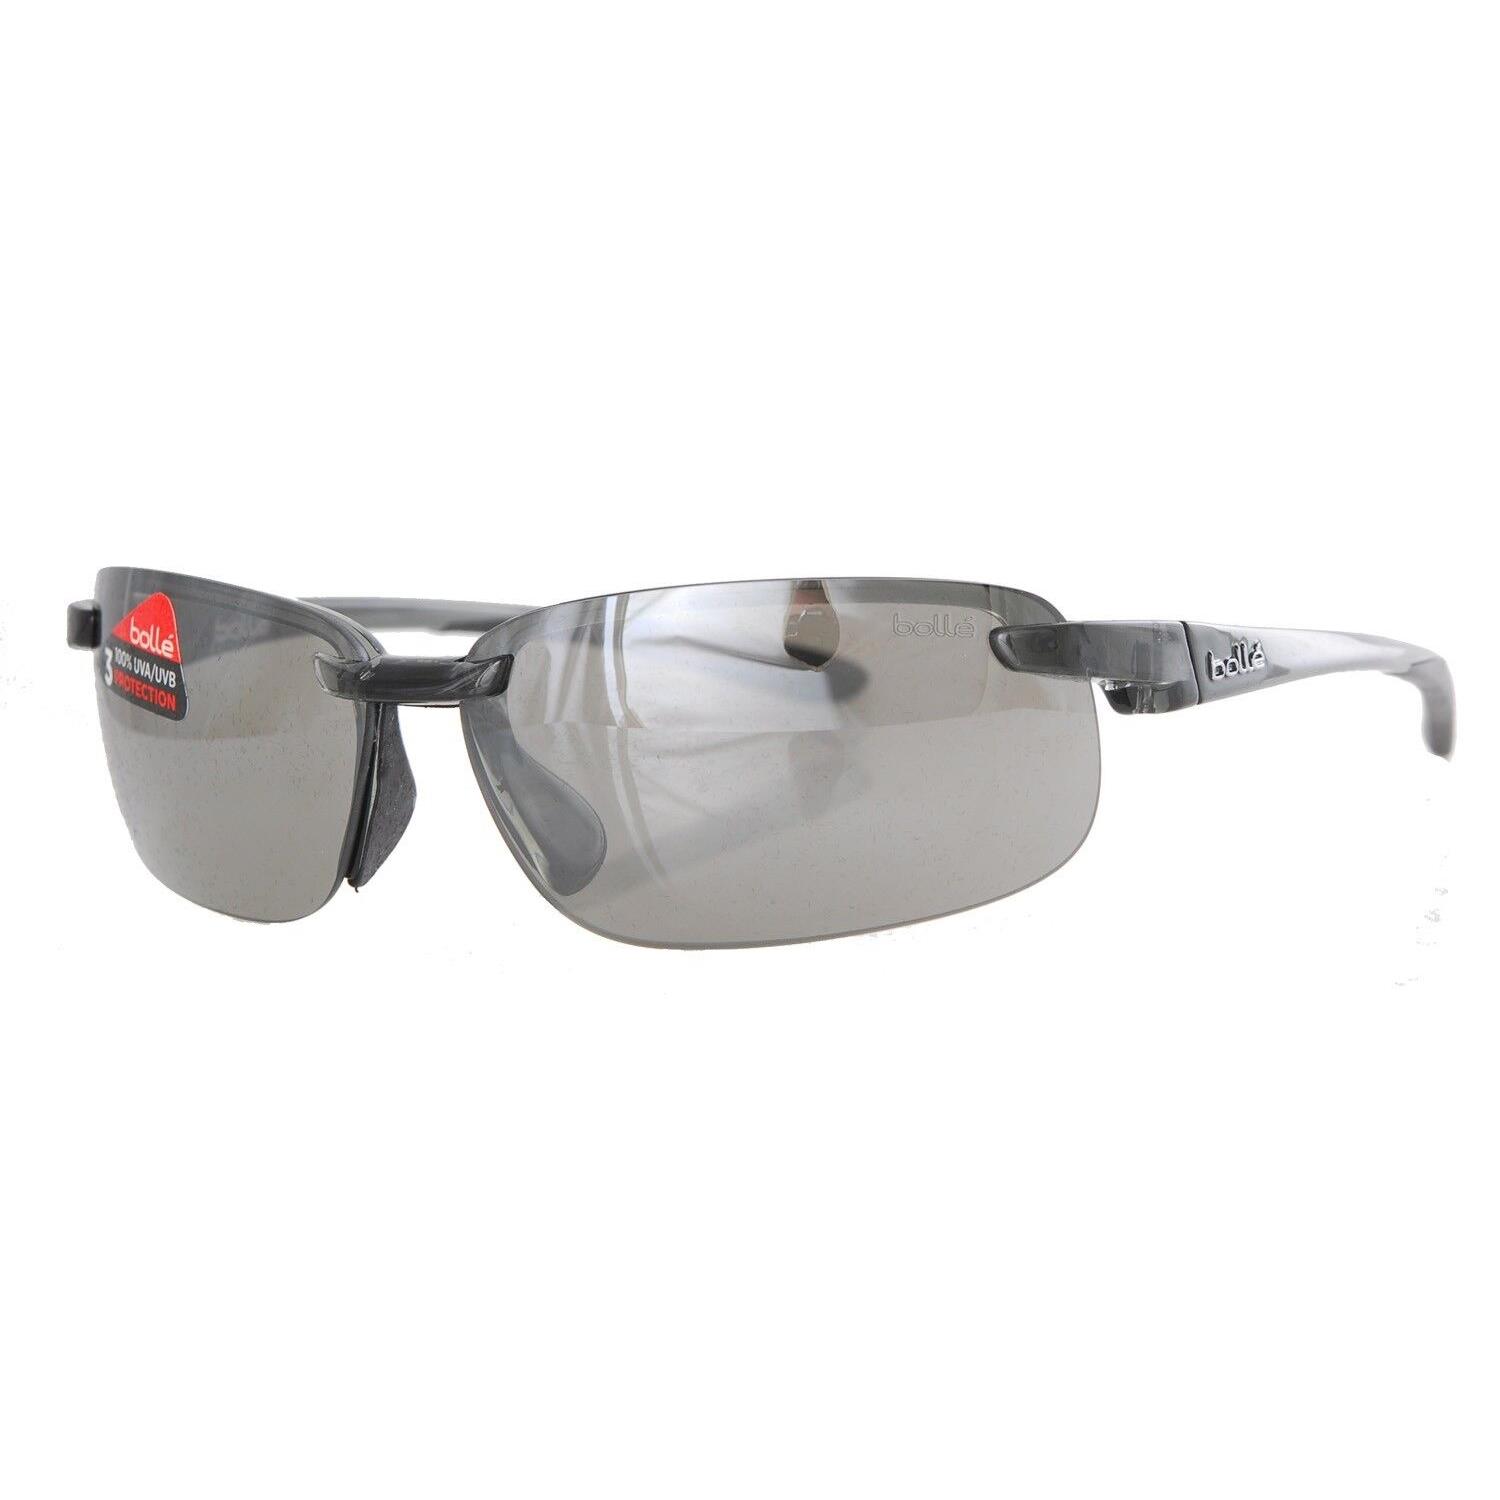 Bolle Attraxion Sunglasses Black Frame / Grey Lens